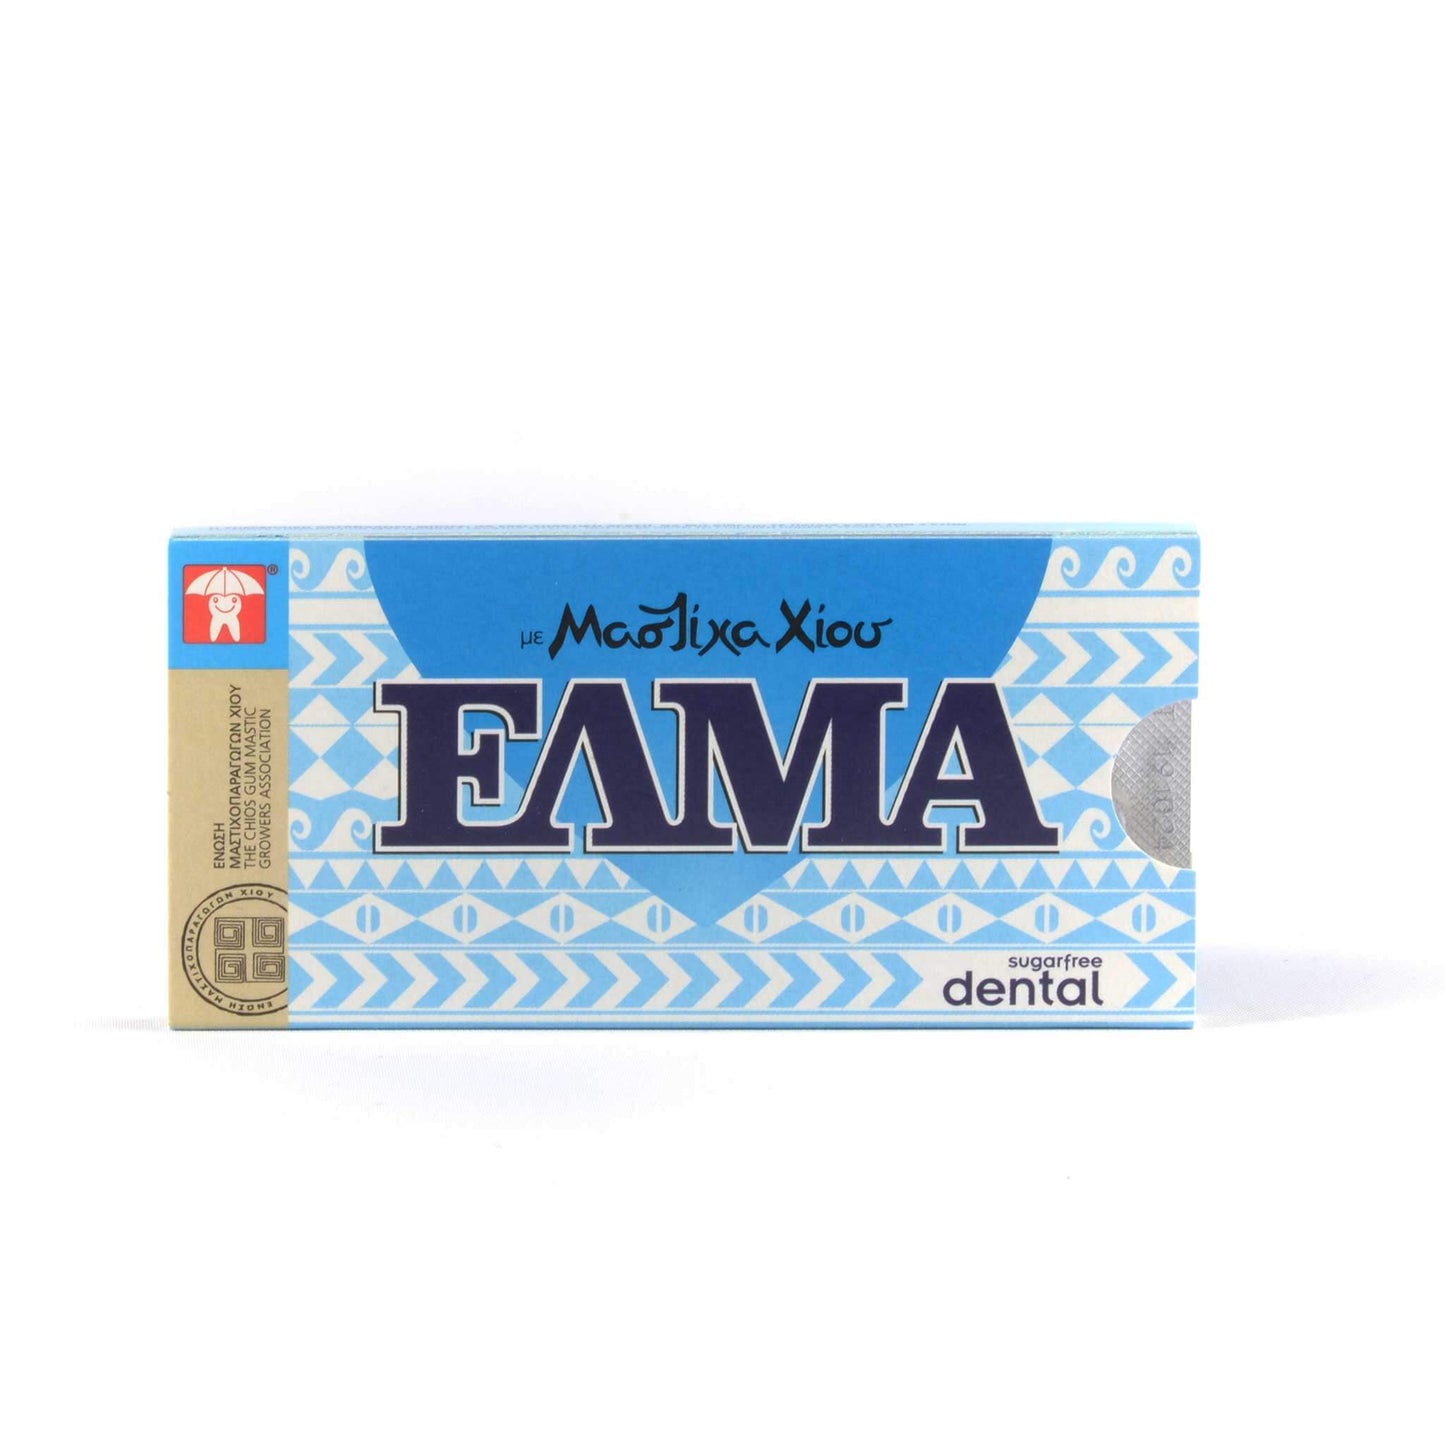 ELMA Dental with mastic gum